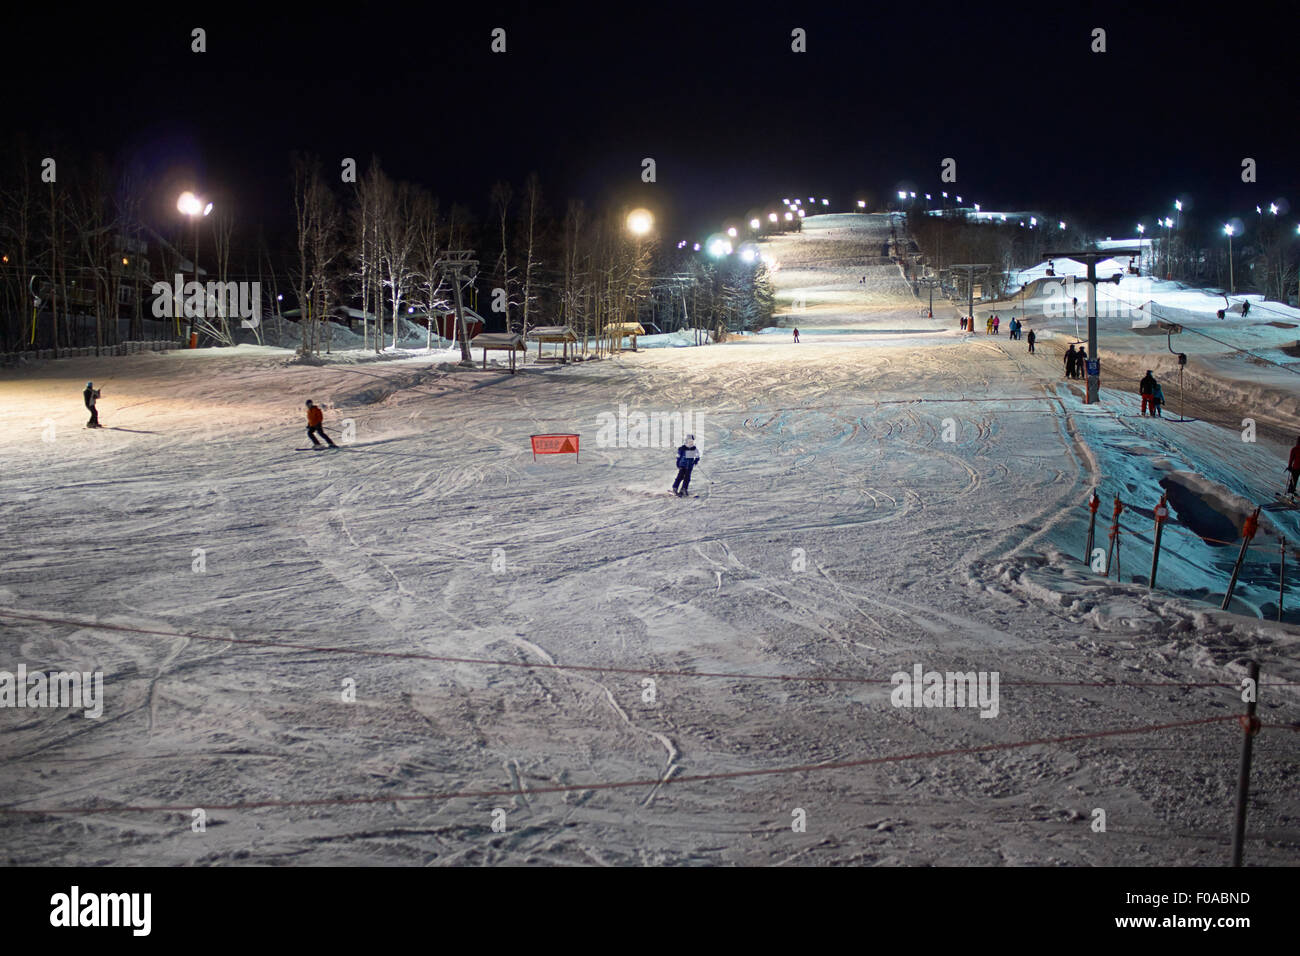 Skiers skiing down ski slope at night, Hemavan, Sweden Stock Photo